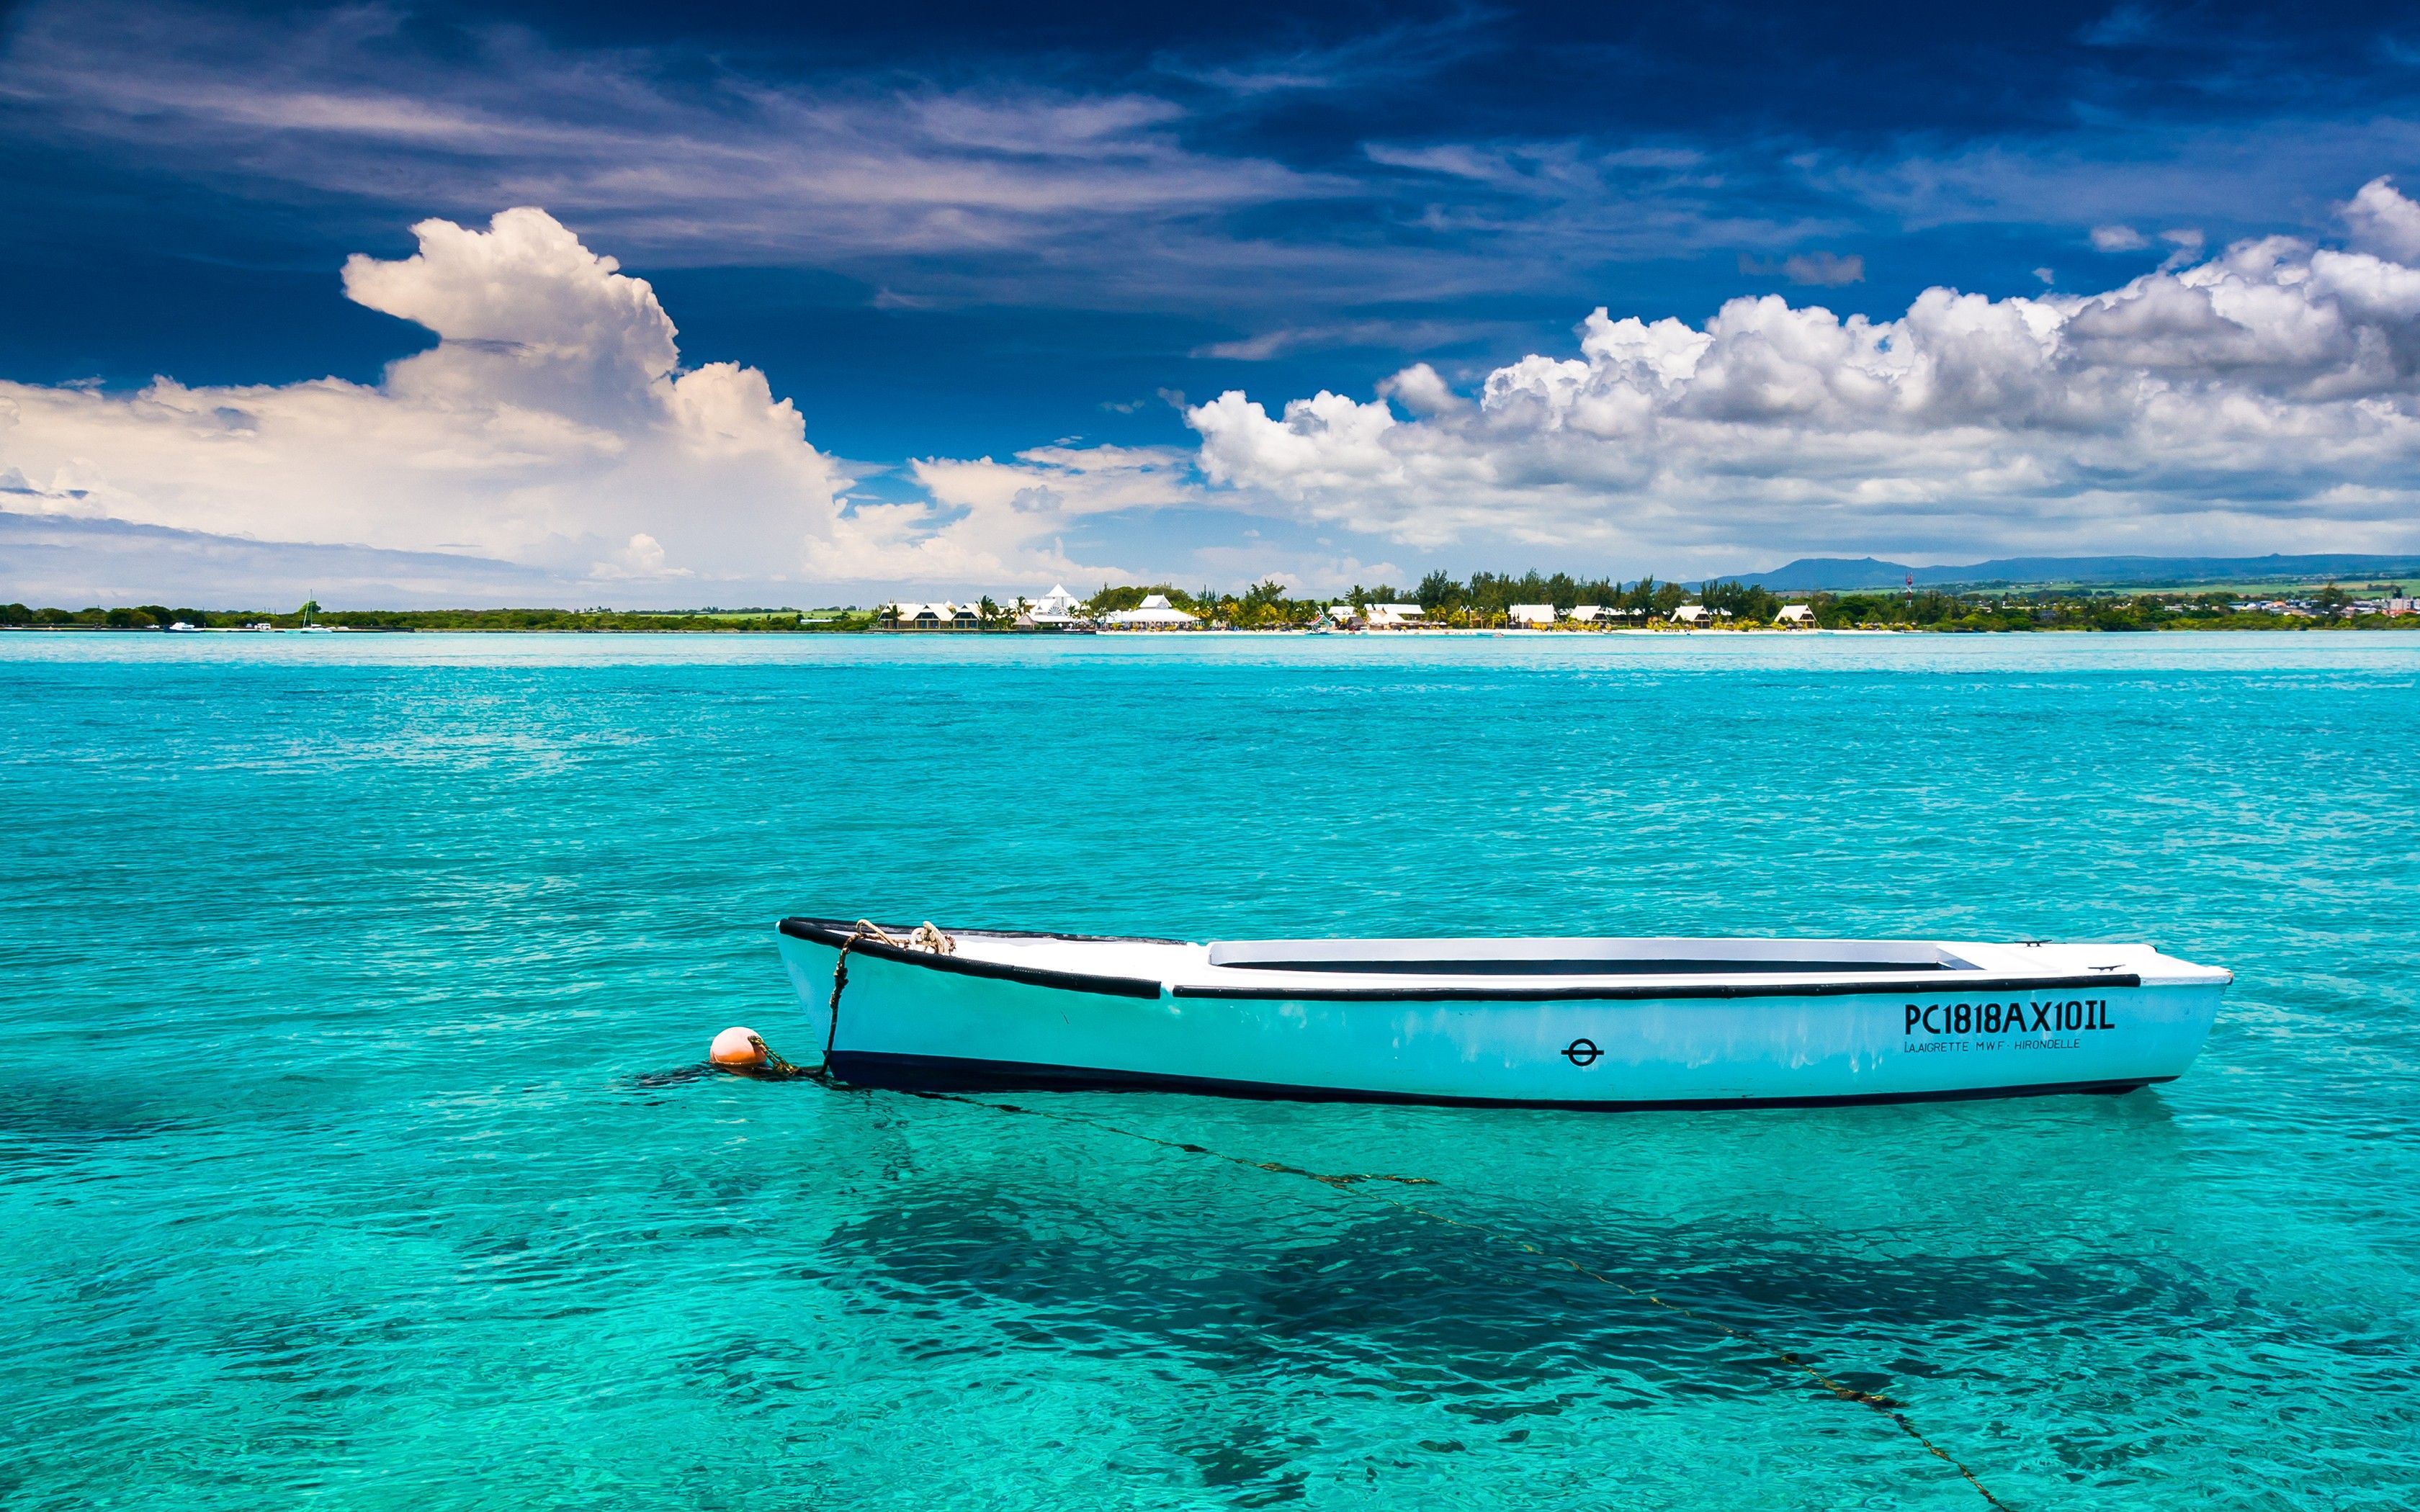 #sea, #turquoise, #water, #beach, #boat, #island